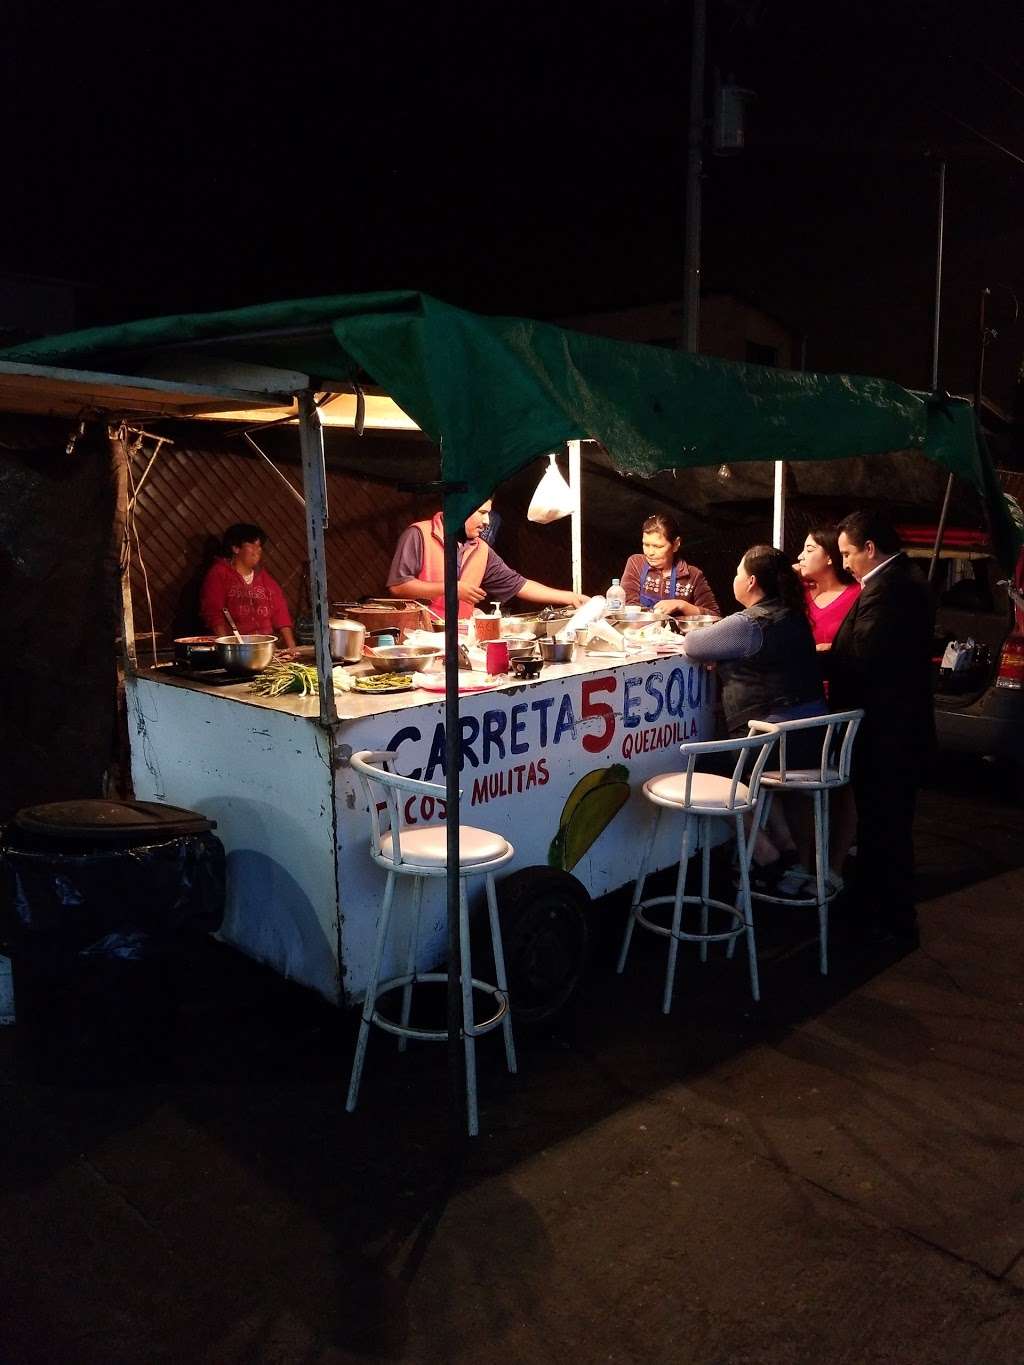 Tacos Carreta 5 Esquinas | Mar Caribe 665, Alemán, Tijuana, B.C., Mexico | Phone: 664 162 9091